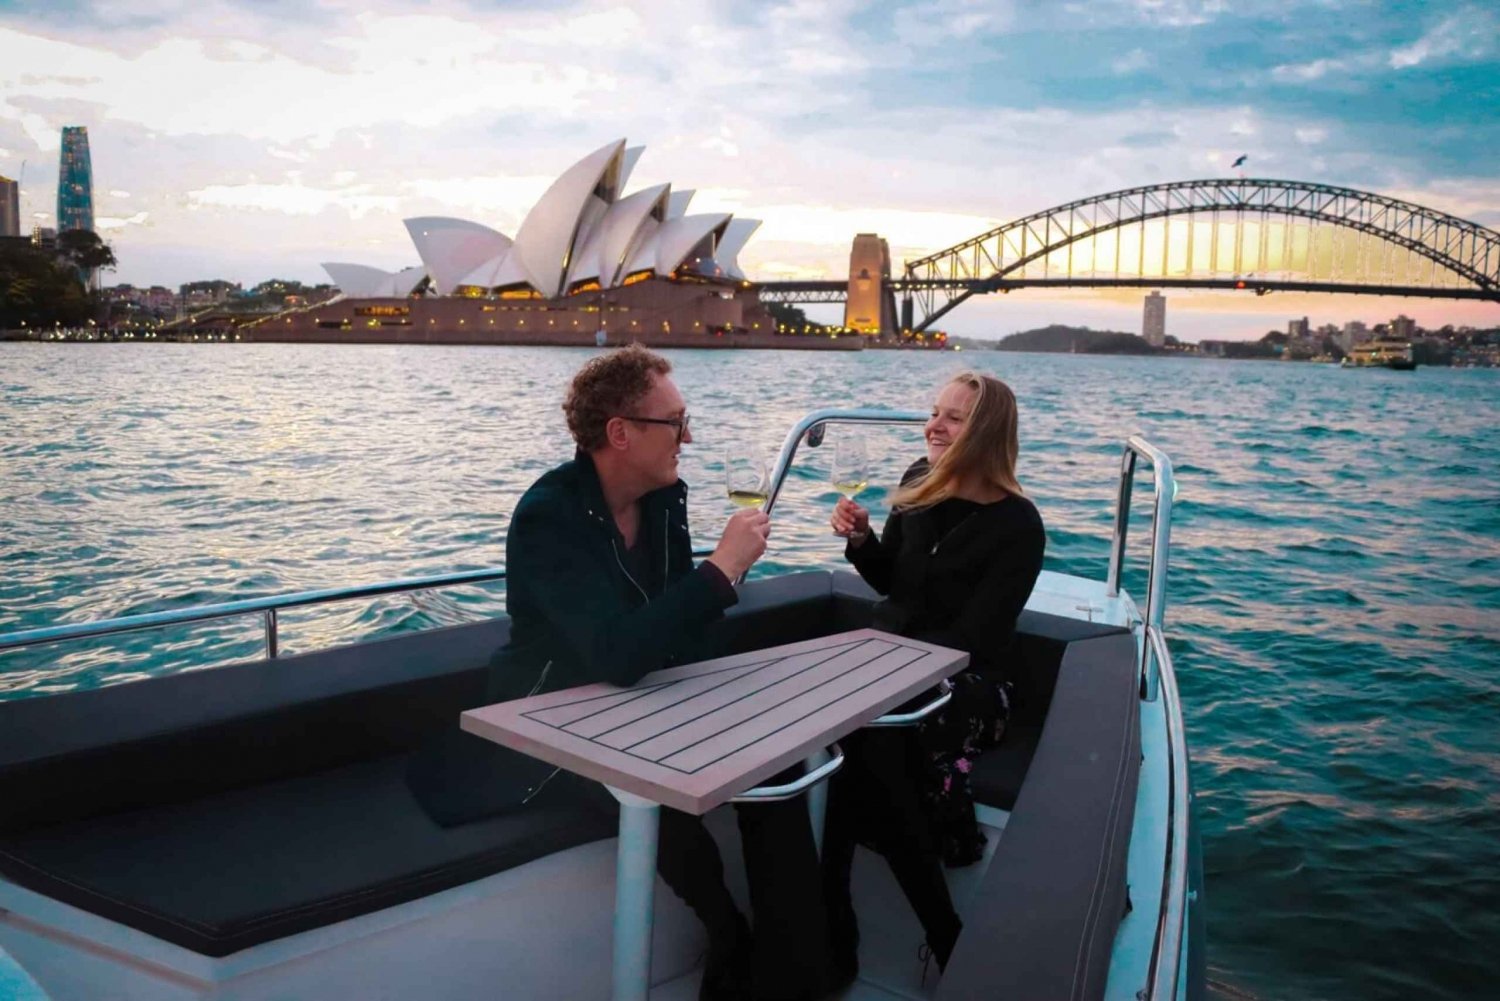 Sydney harbour cruise: Experience Sydney like a local